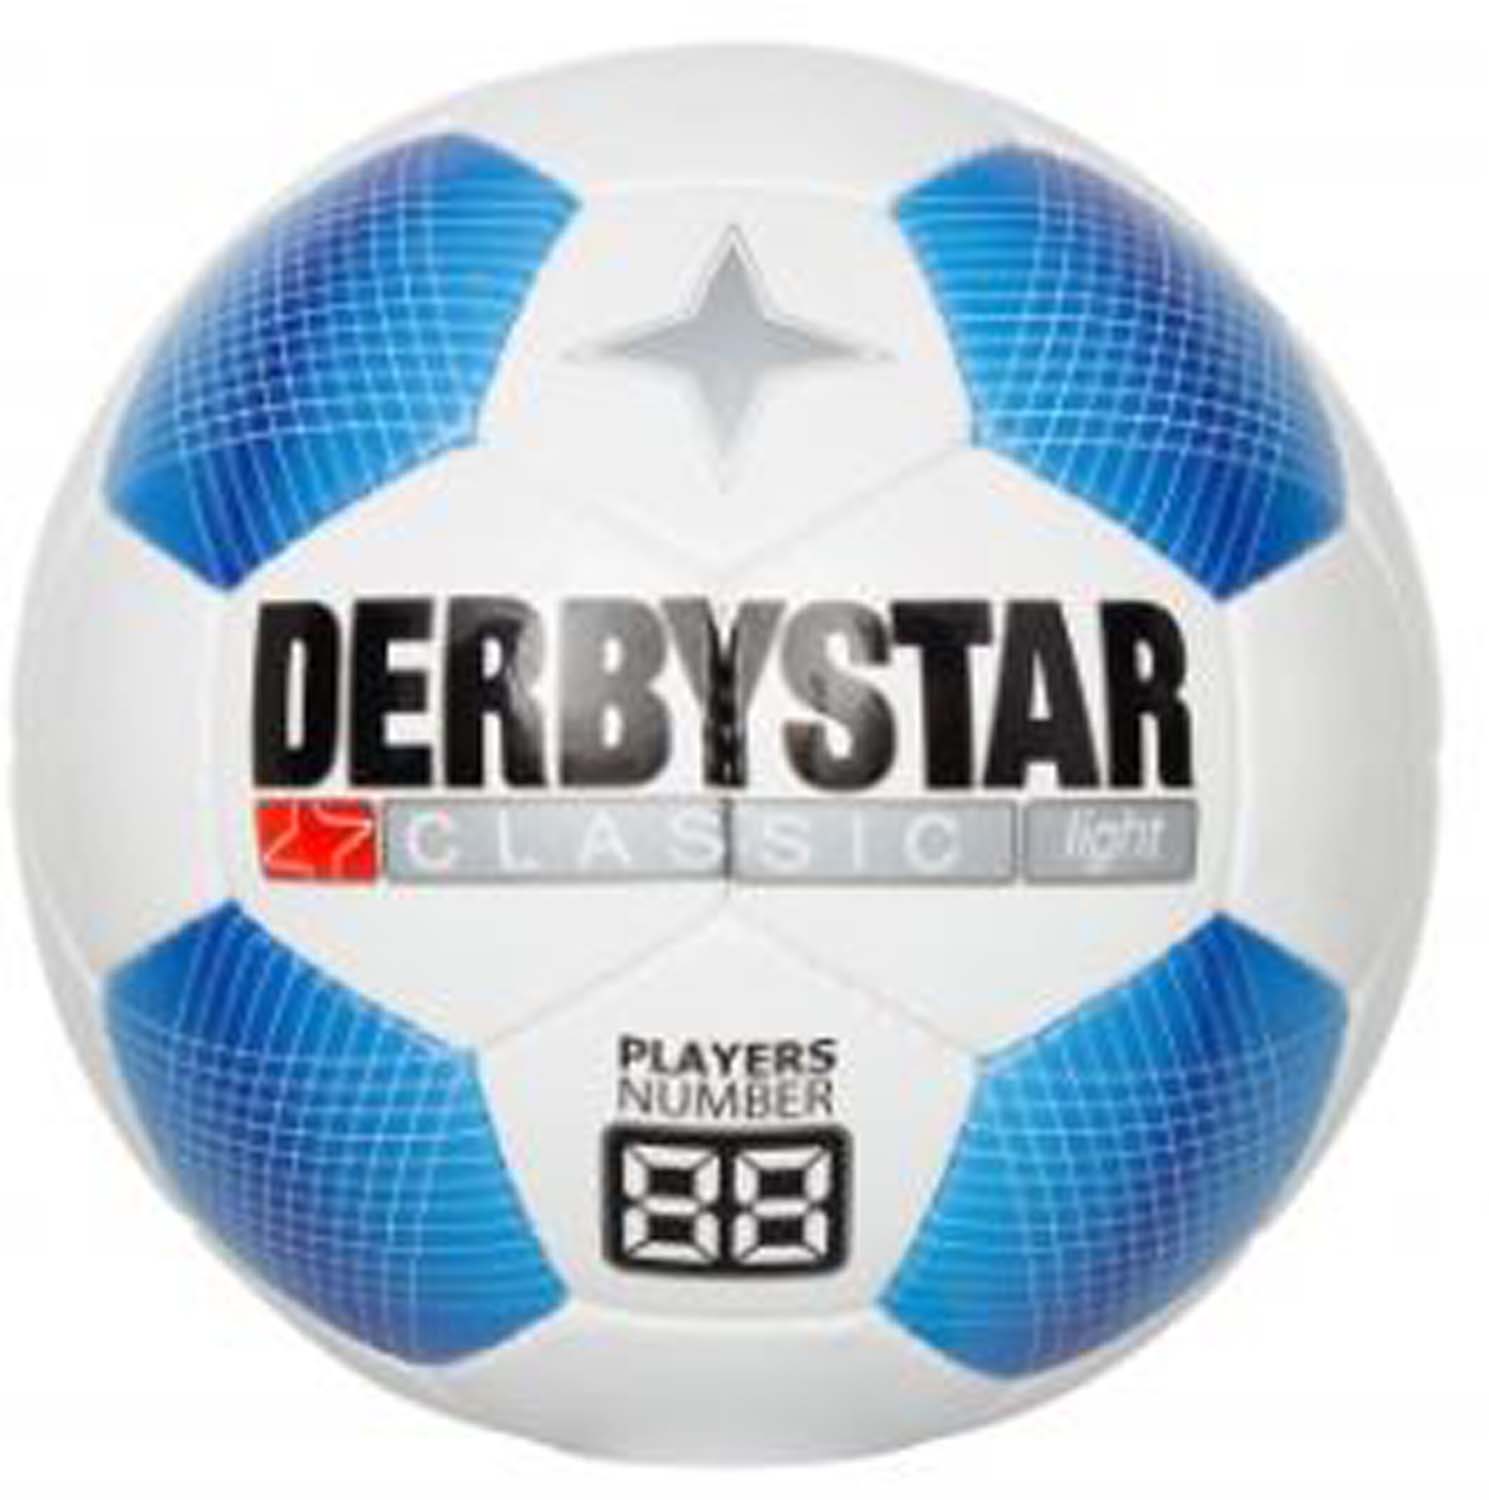 Derbystar Classic TT 5 new